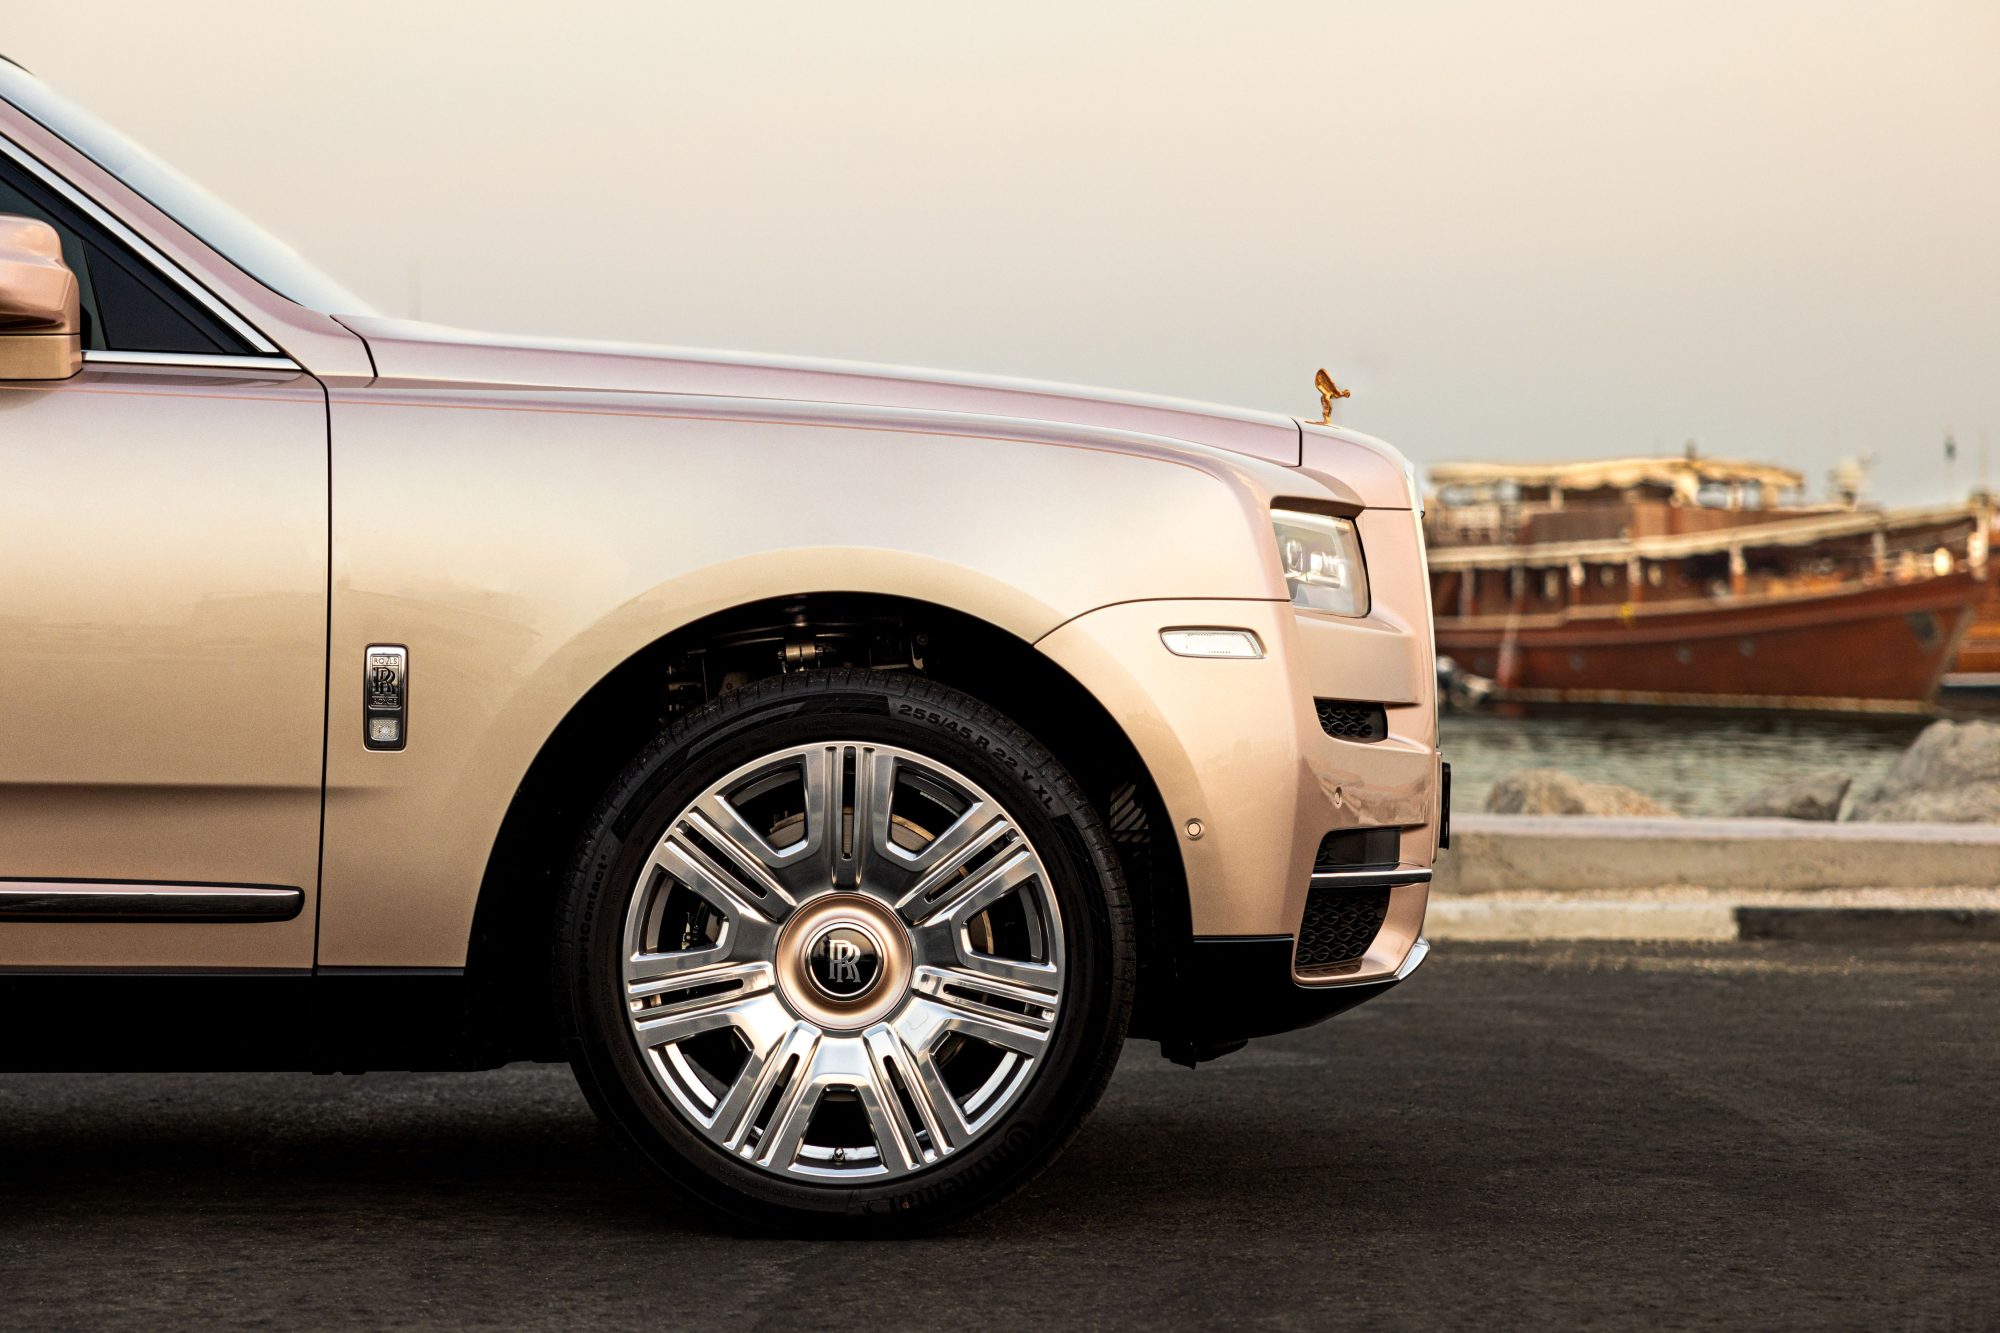 The Pearl Cullinan marks a new era for Rolls-Royce in Dubai